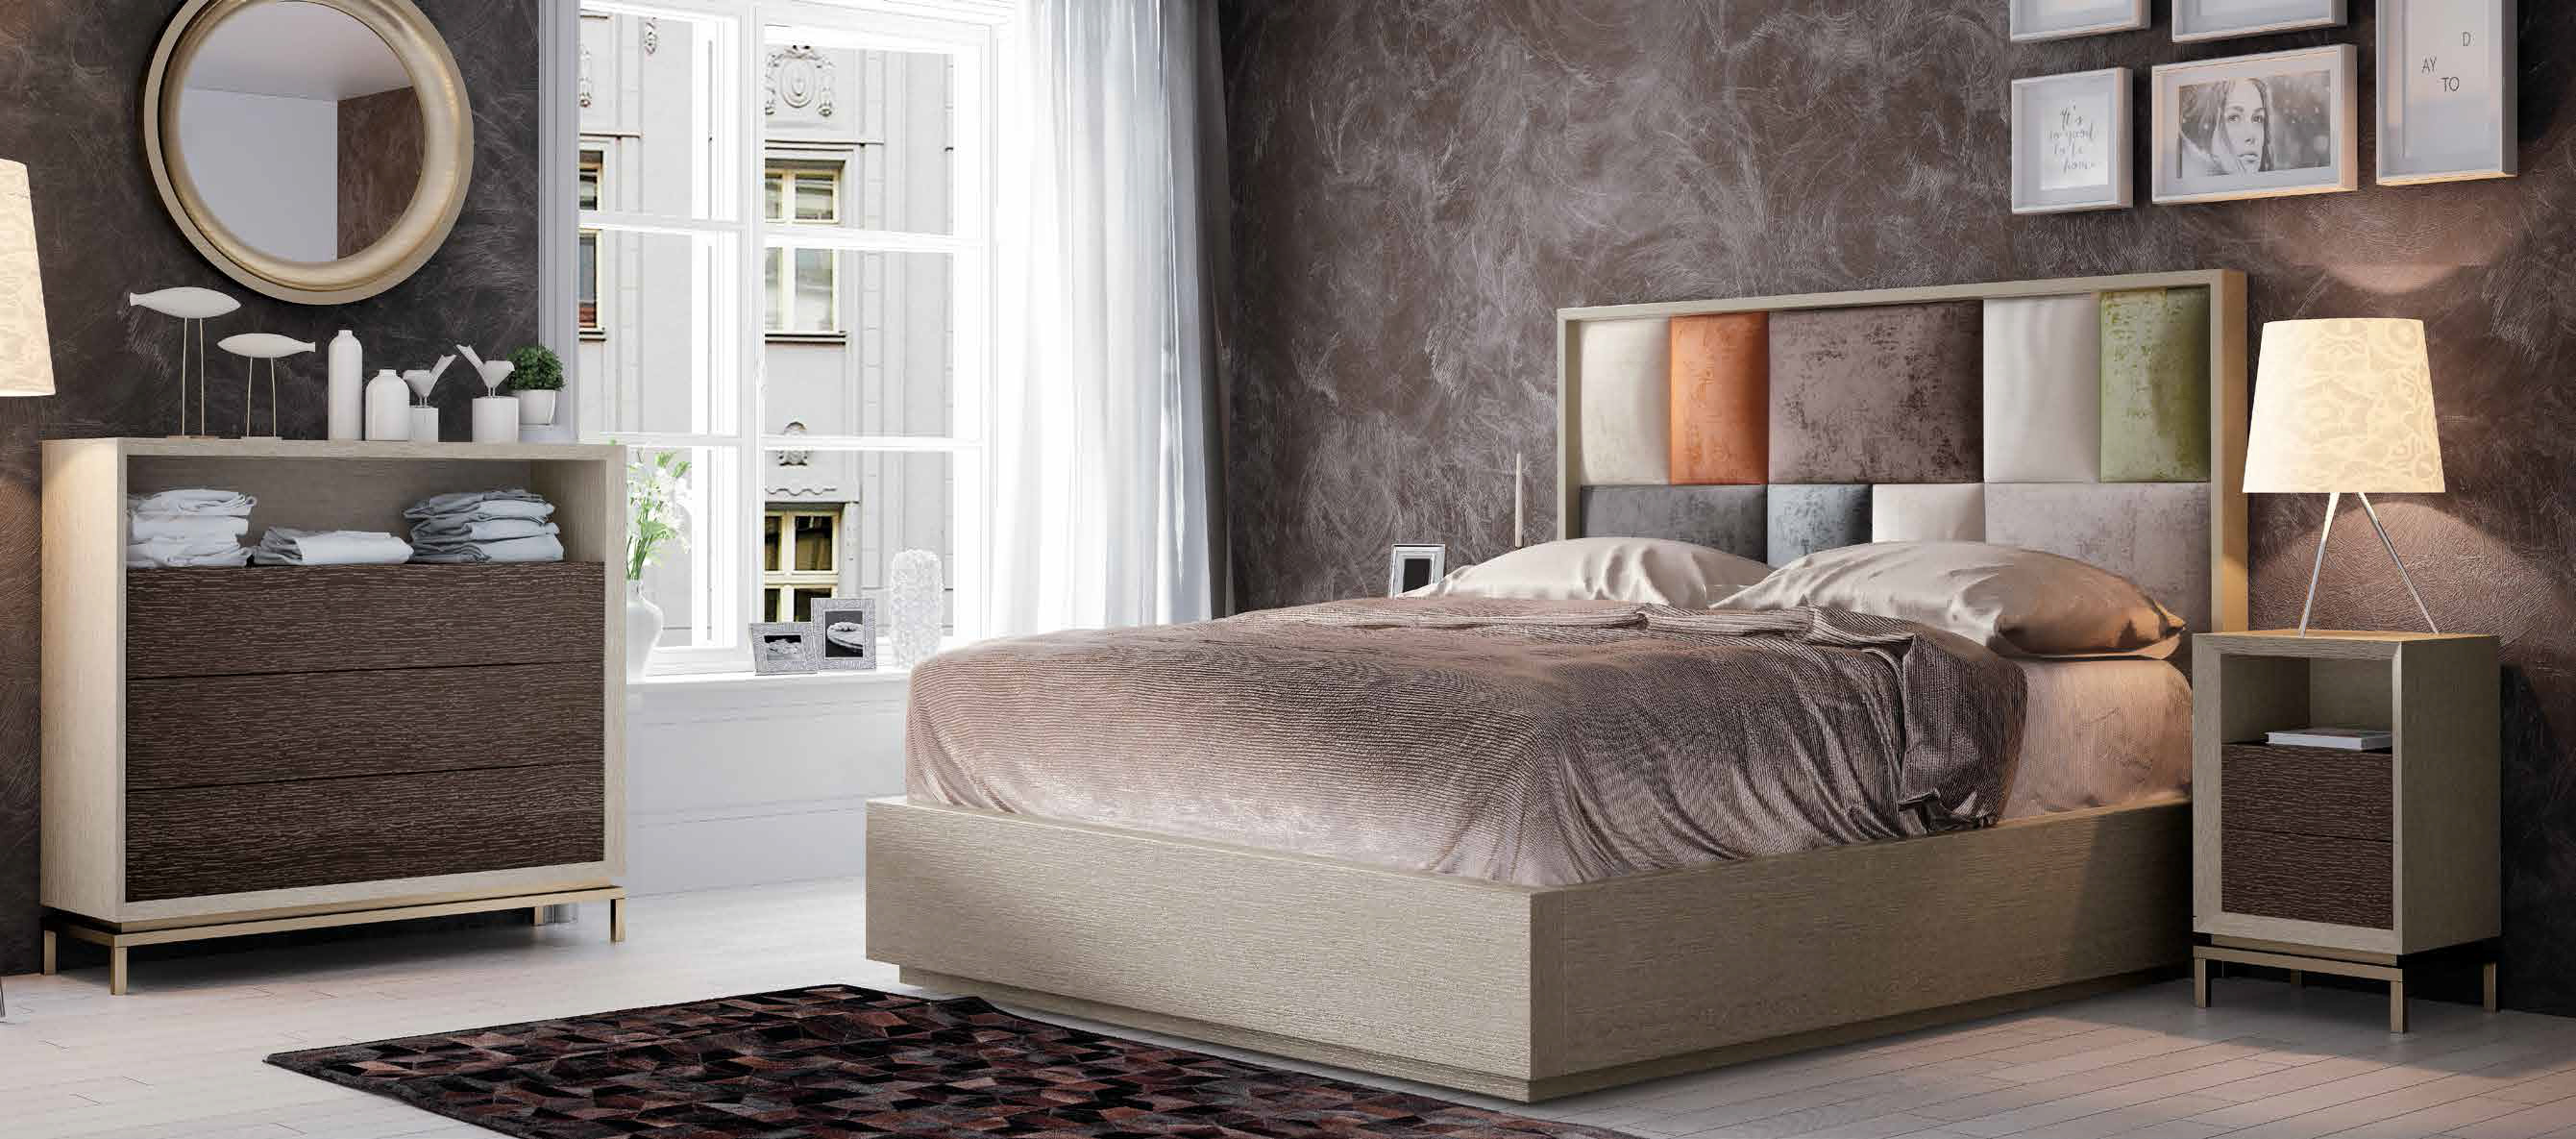 Brands Franco Furniture Bedrooms vol2, Spain DOR 46